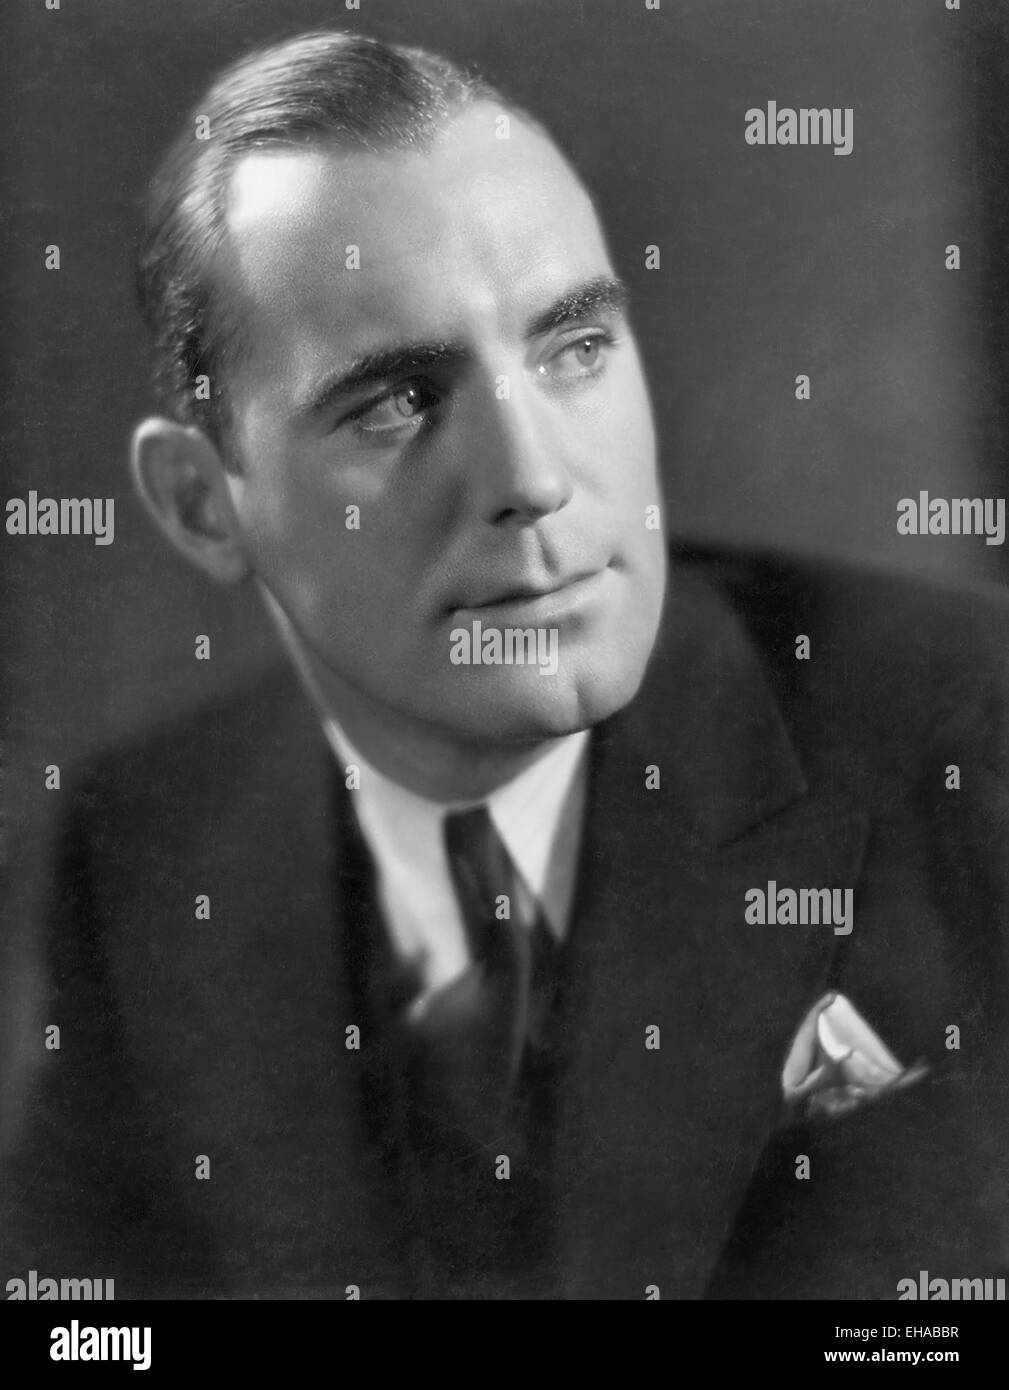 Pat O'Brien, Portrait, 1932 Stock Photo